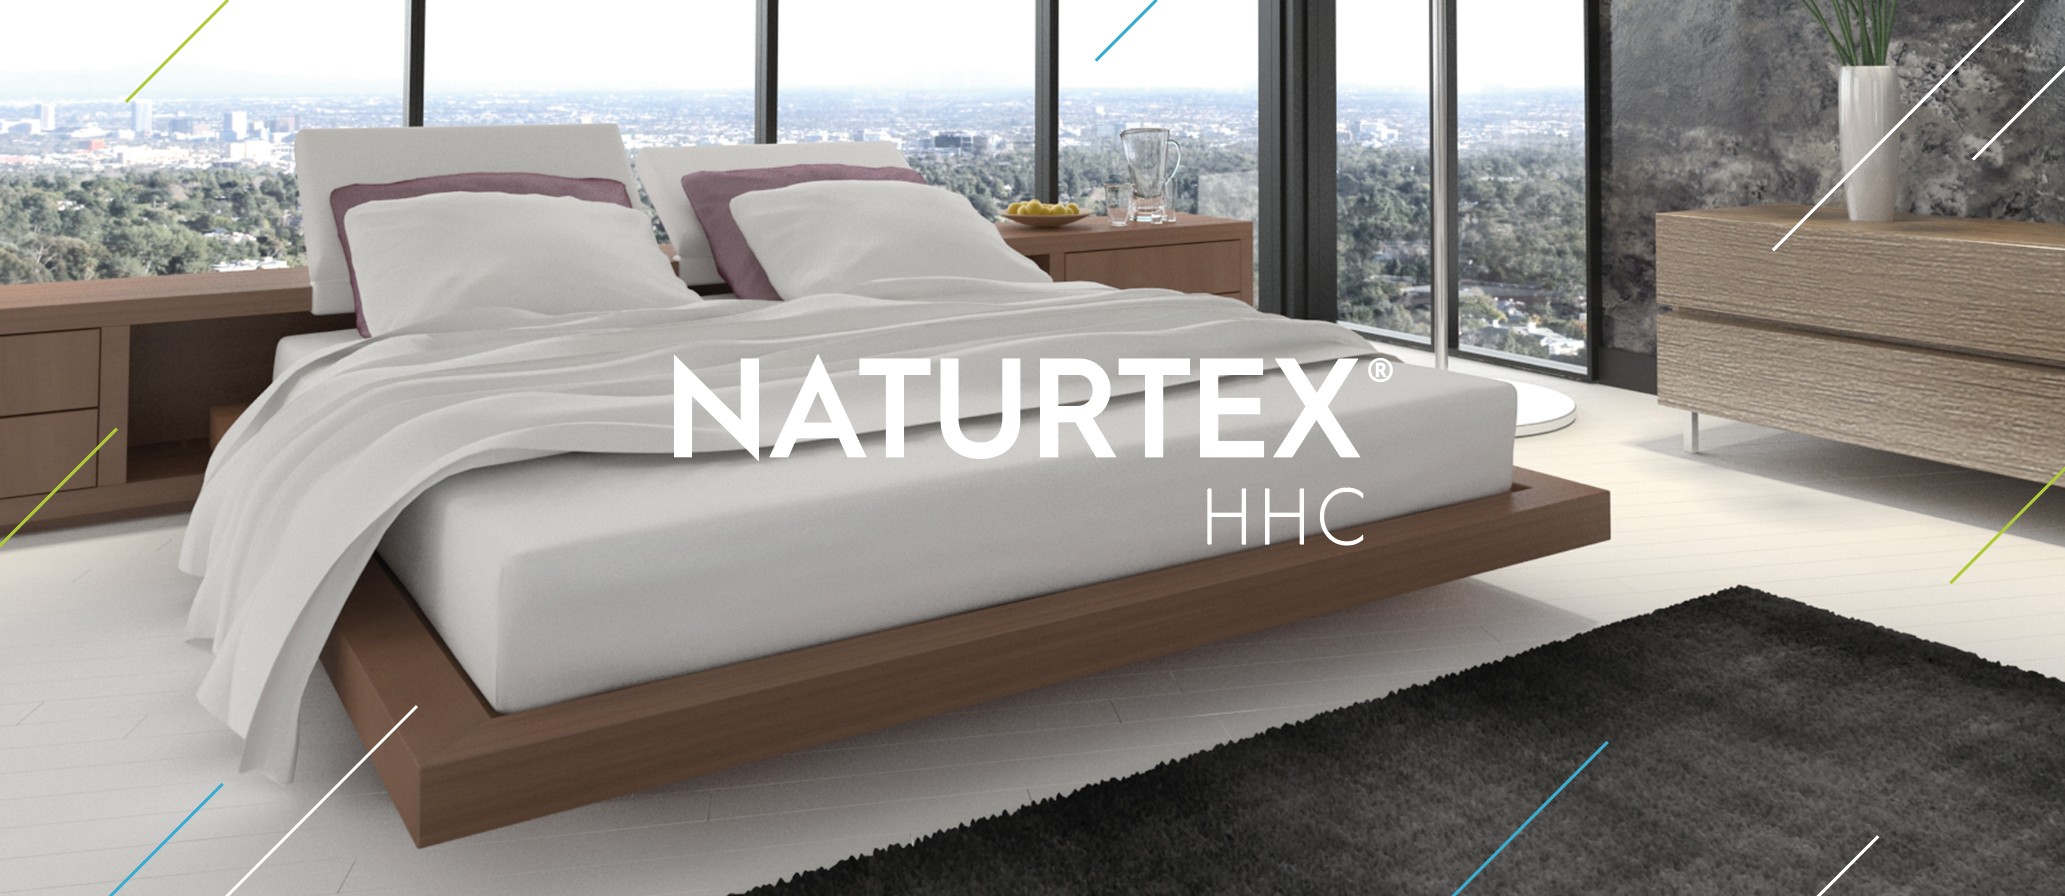 Naturtex.hu - Hotel, gasztró